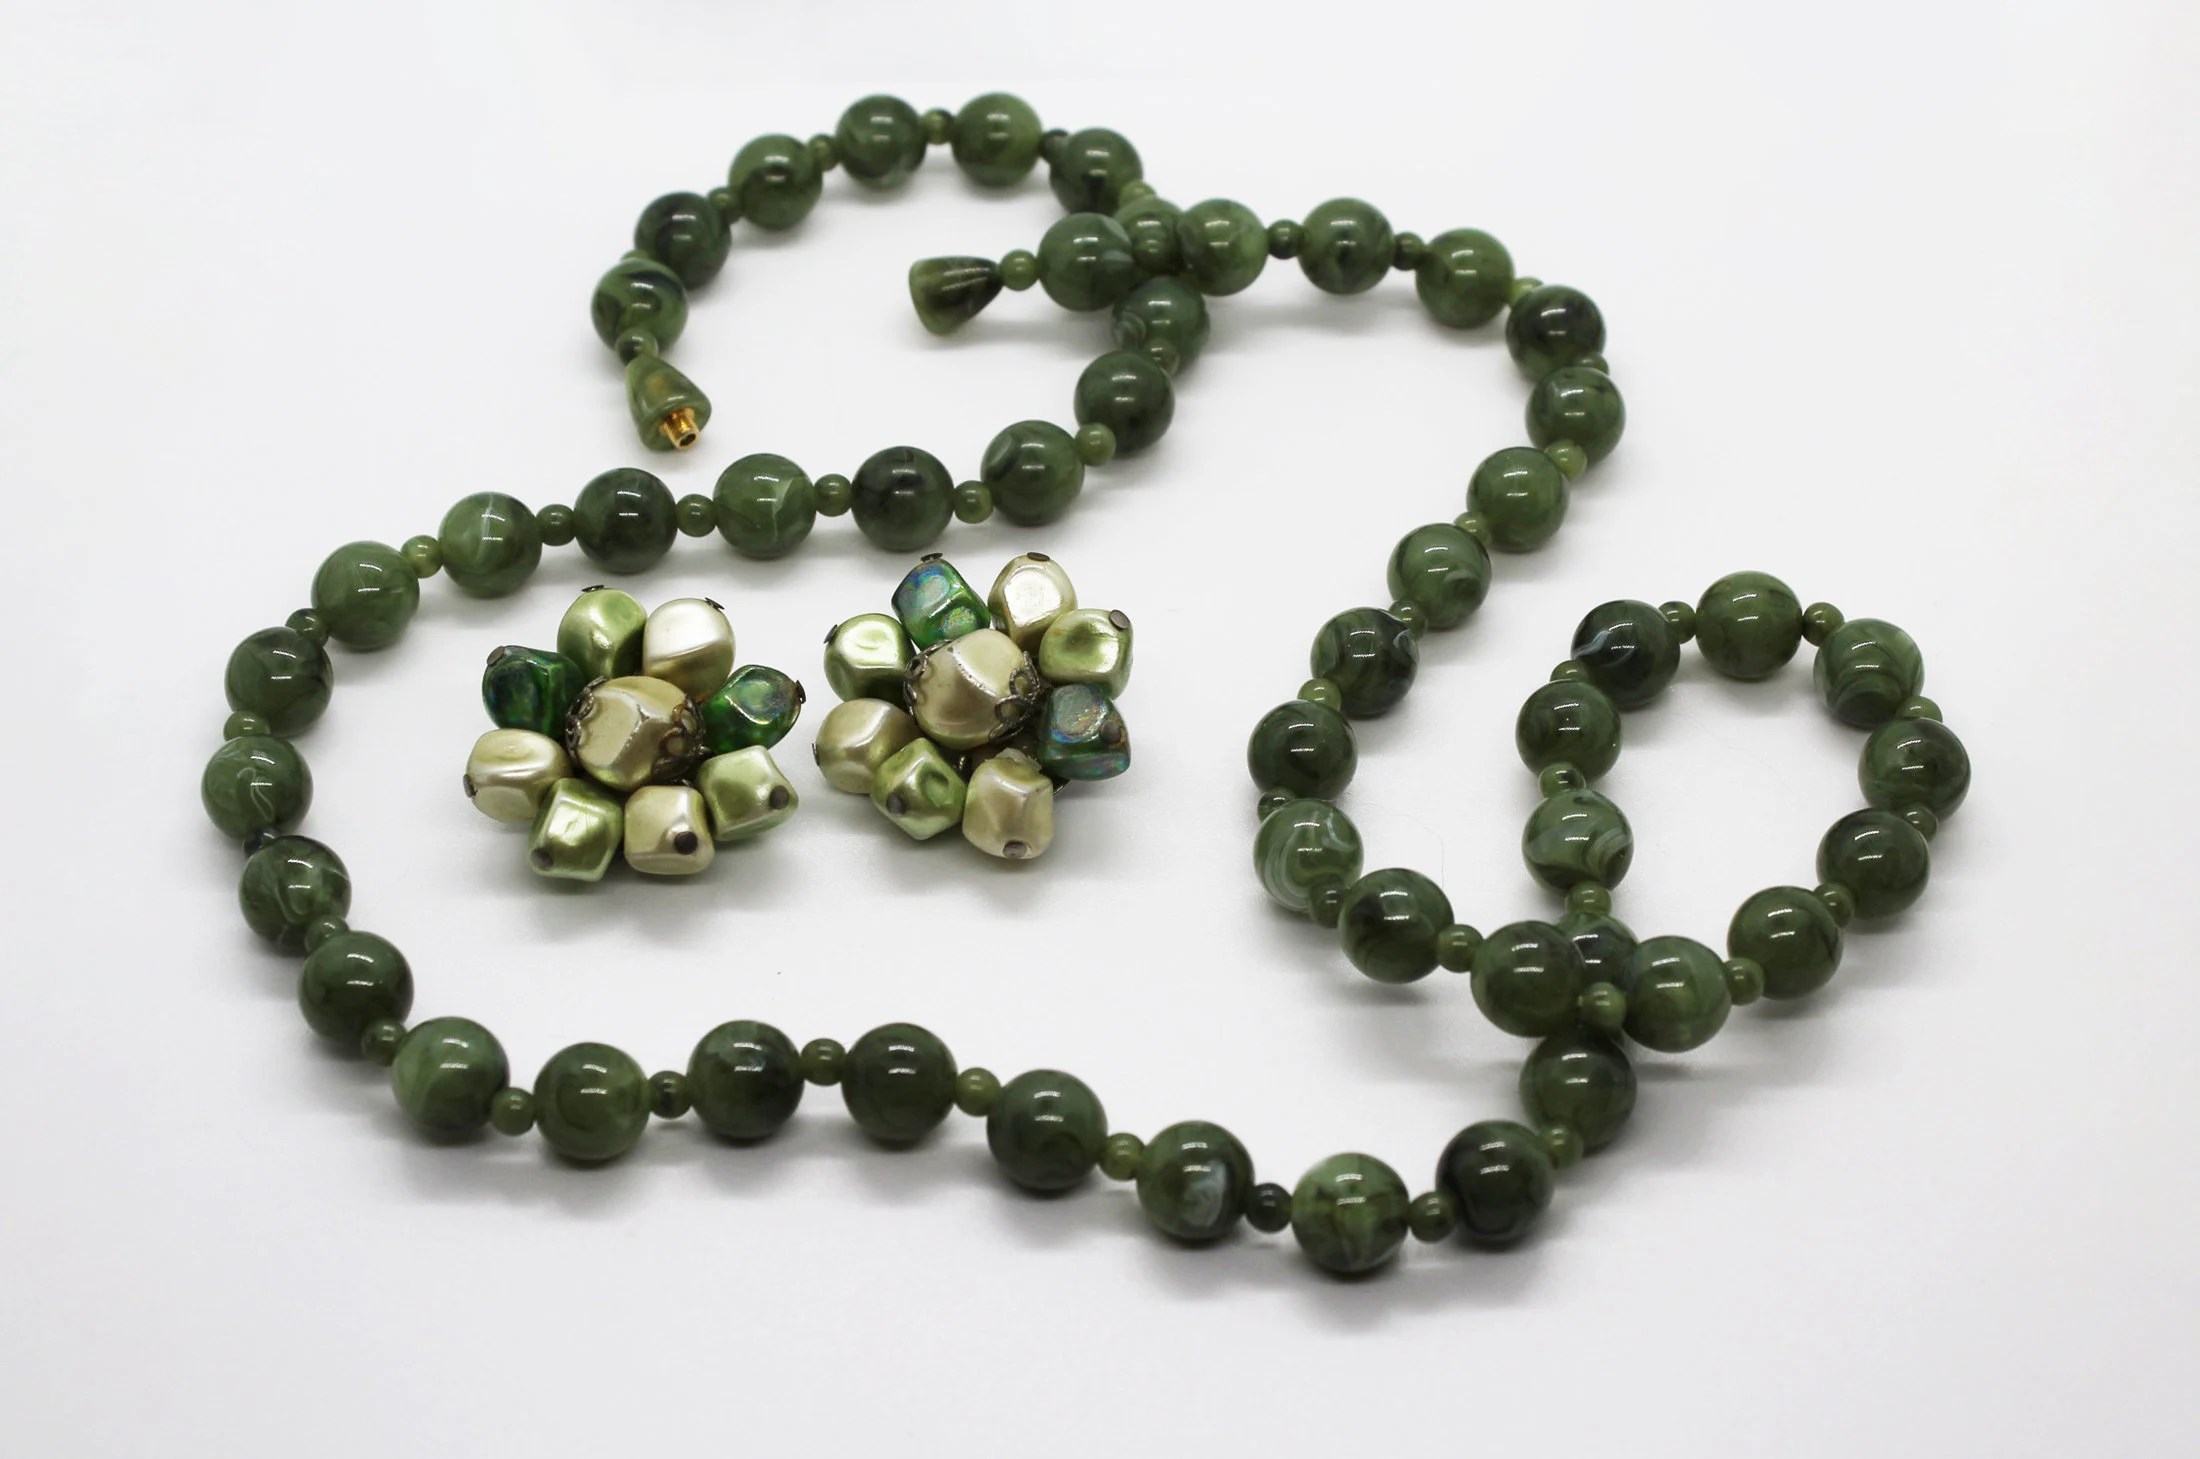 Retro Green Plastic Jewelry Set - Necklace & Earrings - Vintage Costume Fun Funky Bold MCM Mid Century Mod Boho Chic Beaded Fashion